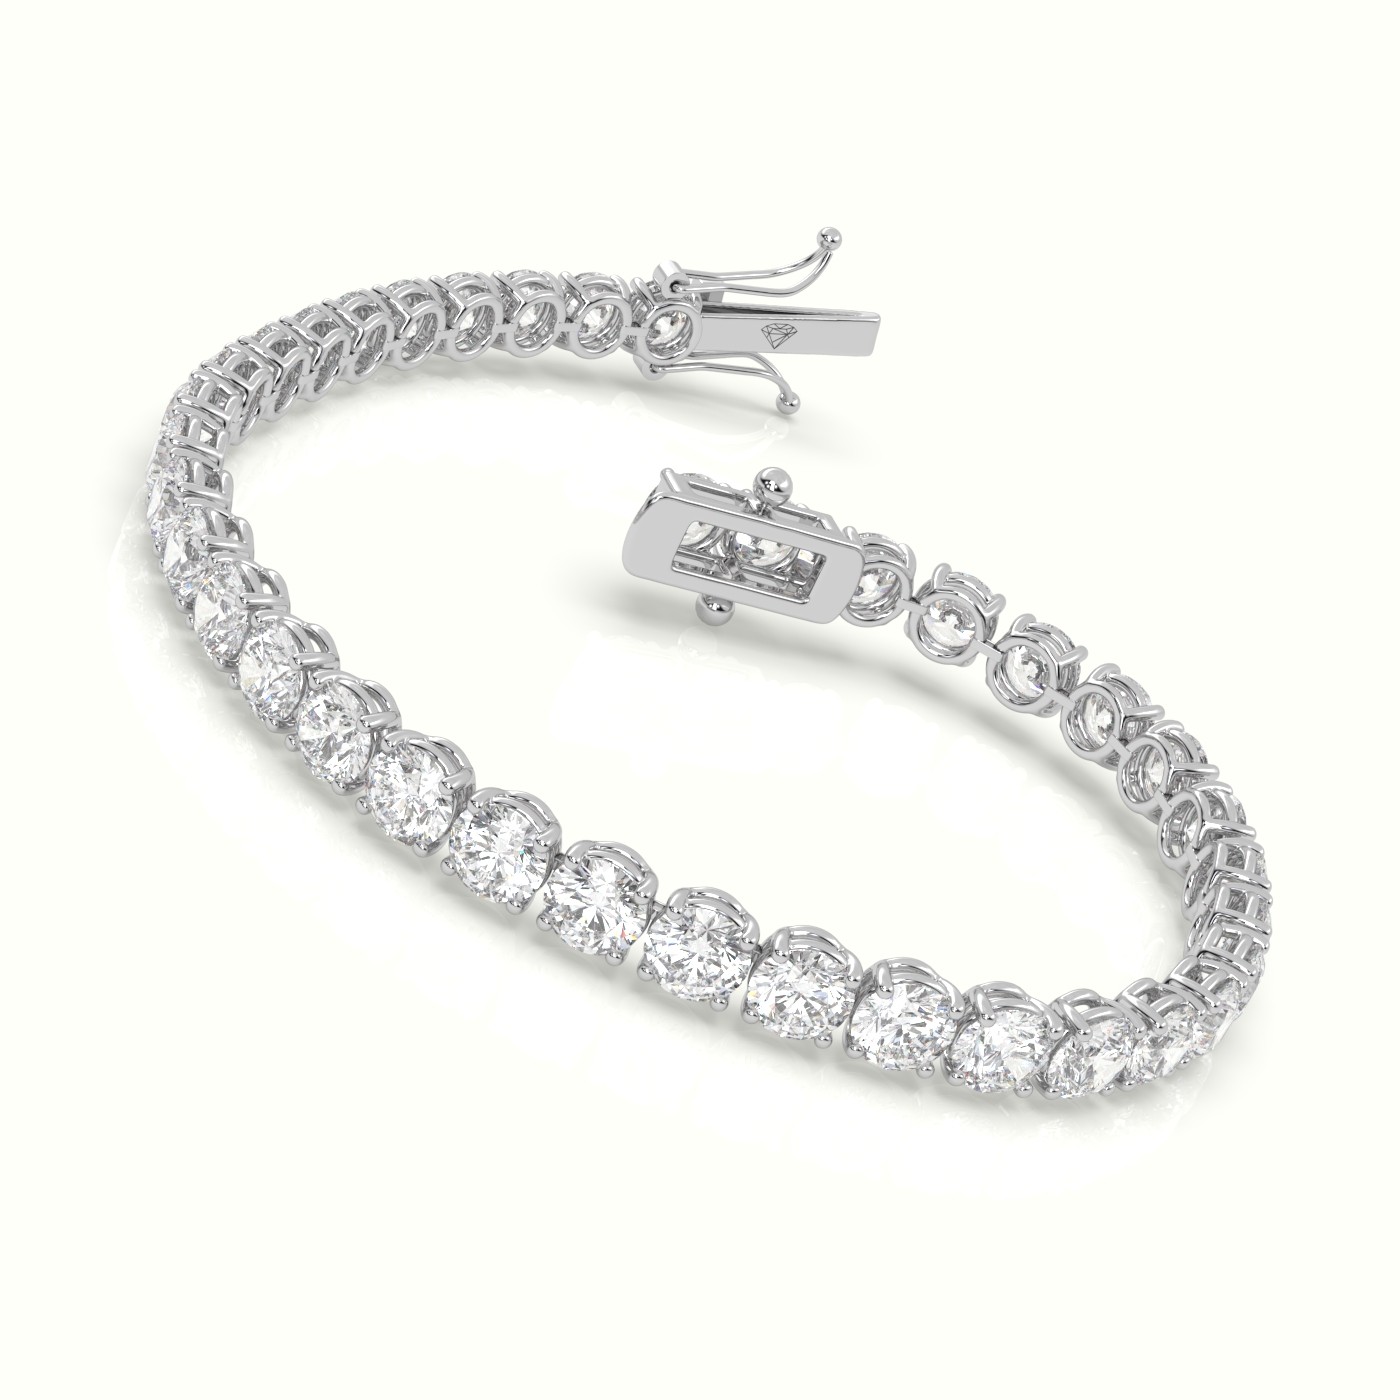 18k white gold  tennis bracelet 12.95 carat diamonds Photos & images